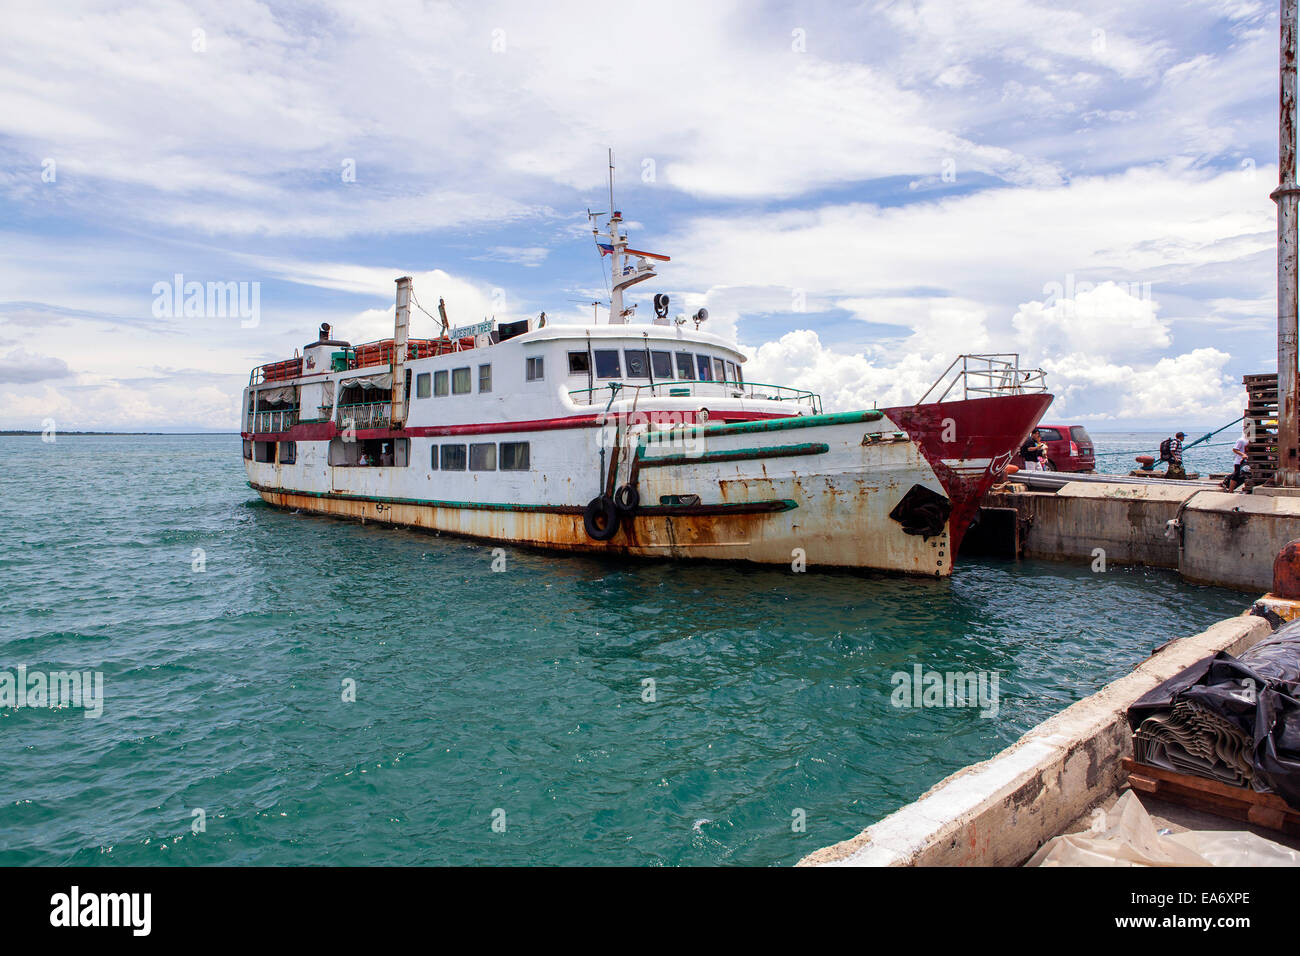 Tubigon Port, Bohol Island, Philippines - Aged and rusting tourist ferry boat that runs from Cebu to Bohol. Stock Photo